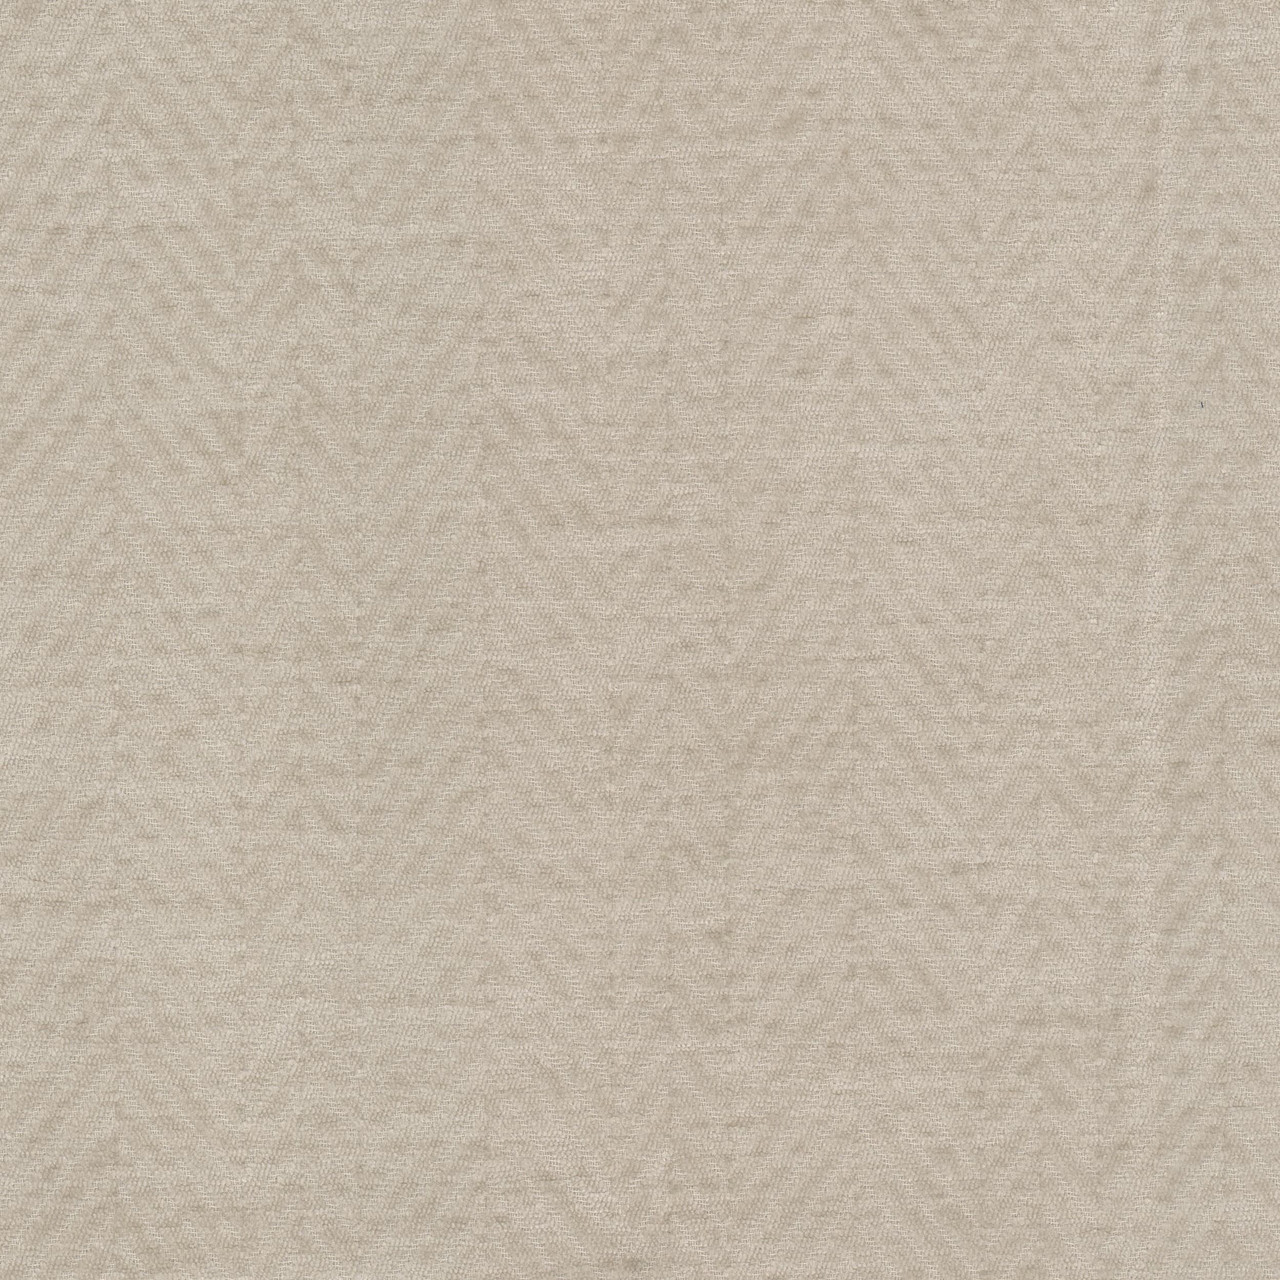 Stout Ormond Burlap Fabric